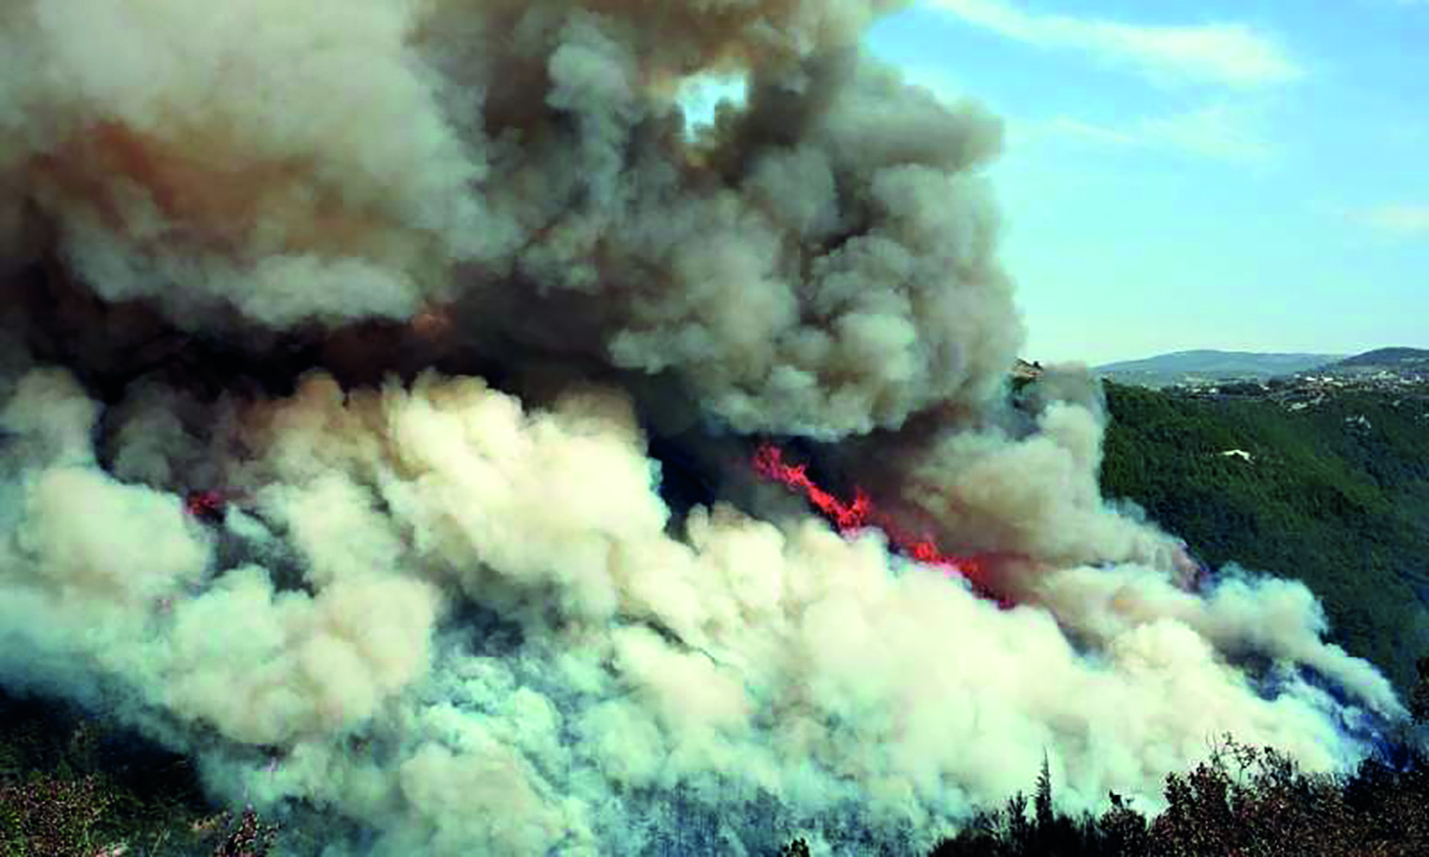 Libanon - požár (zdroj: Digital juranl)